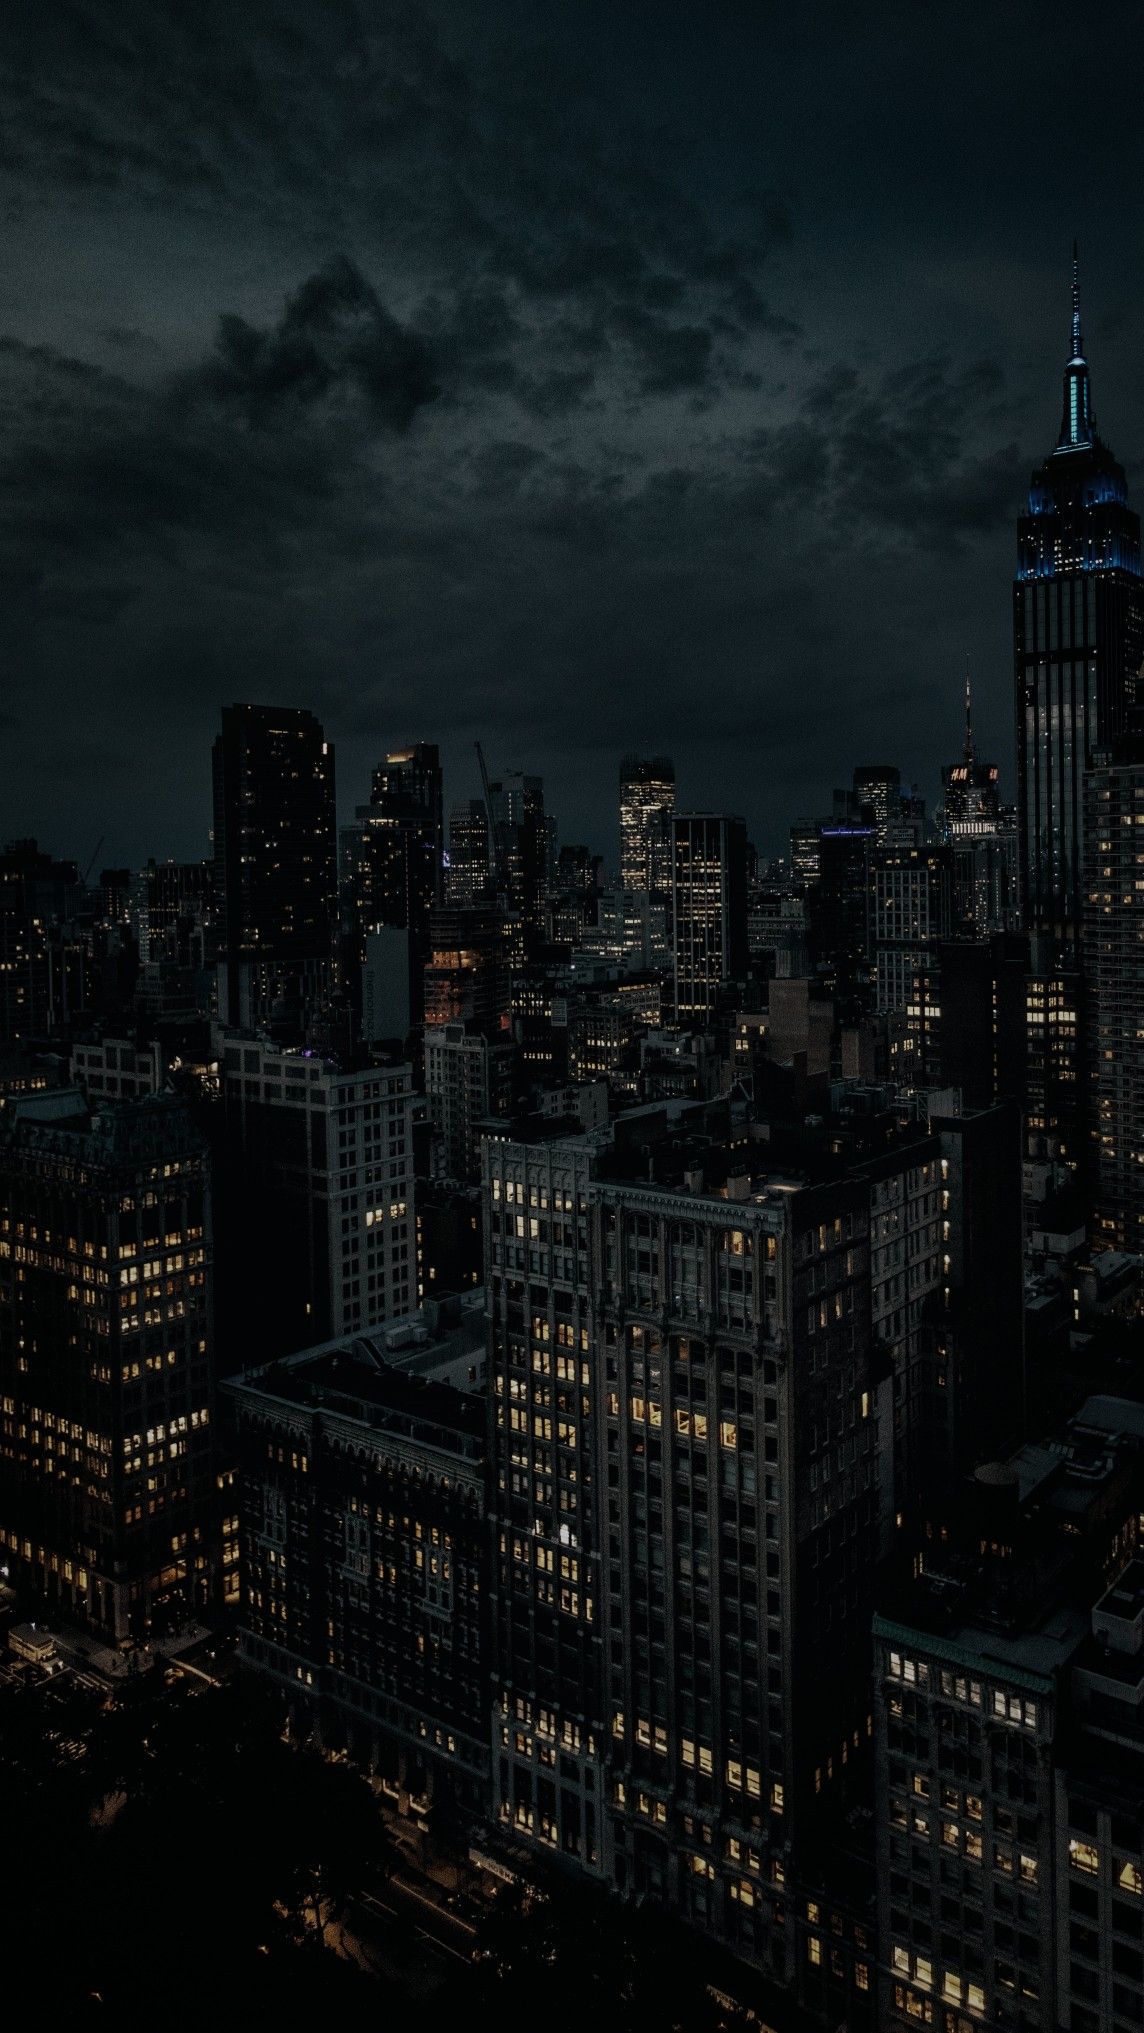 Dark Night City Lighte And Buildings Wallpaper Aesthetic